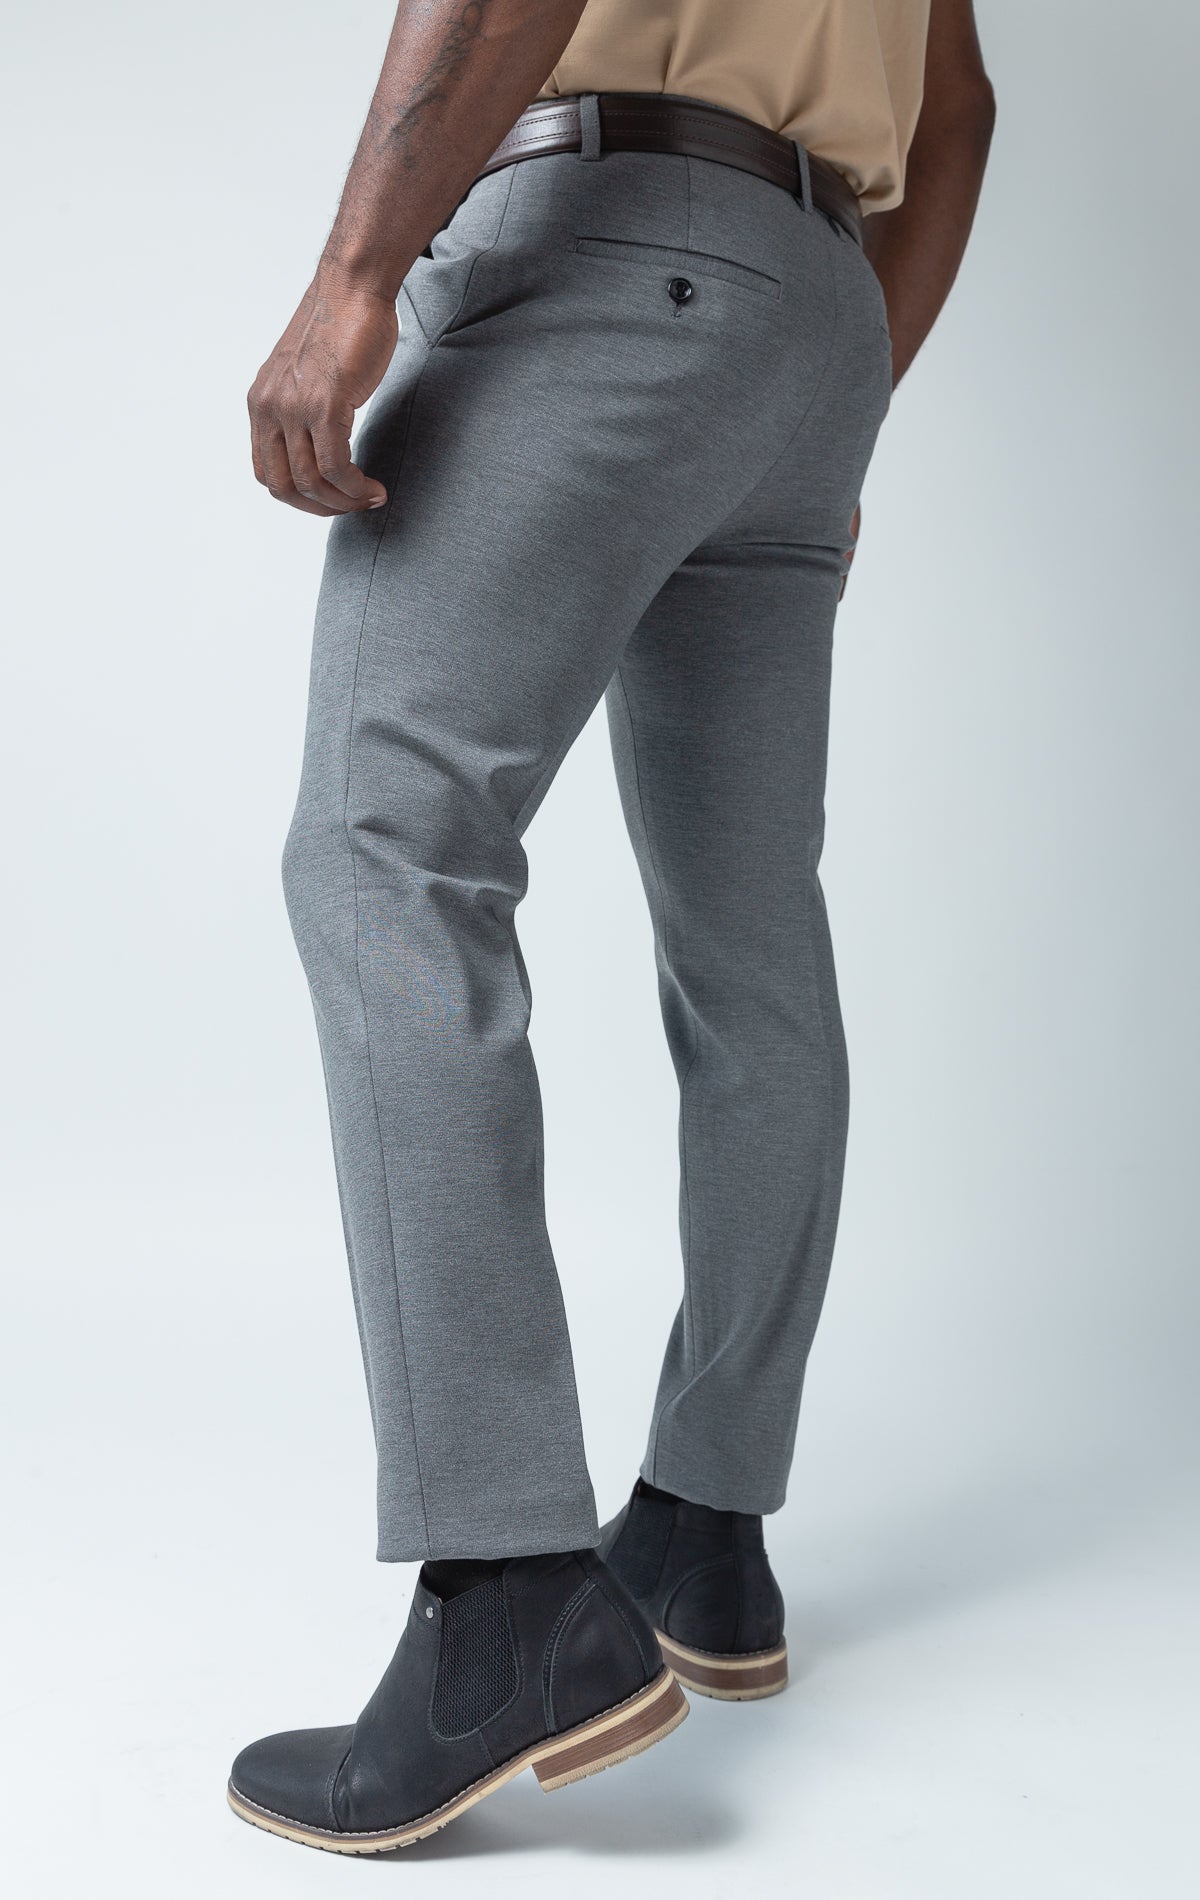 Grey dress pants with elastic waistband technology.